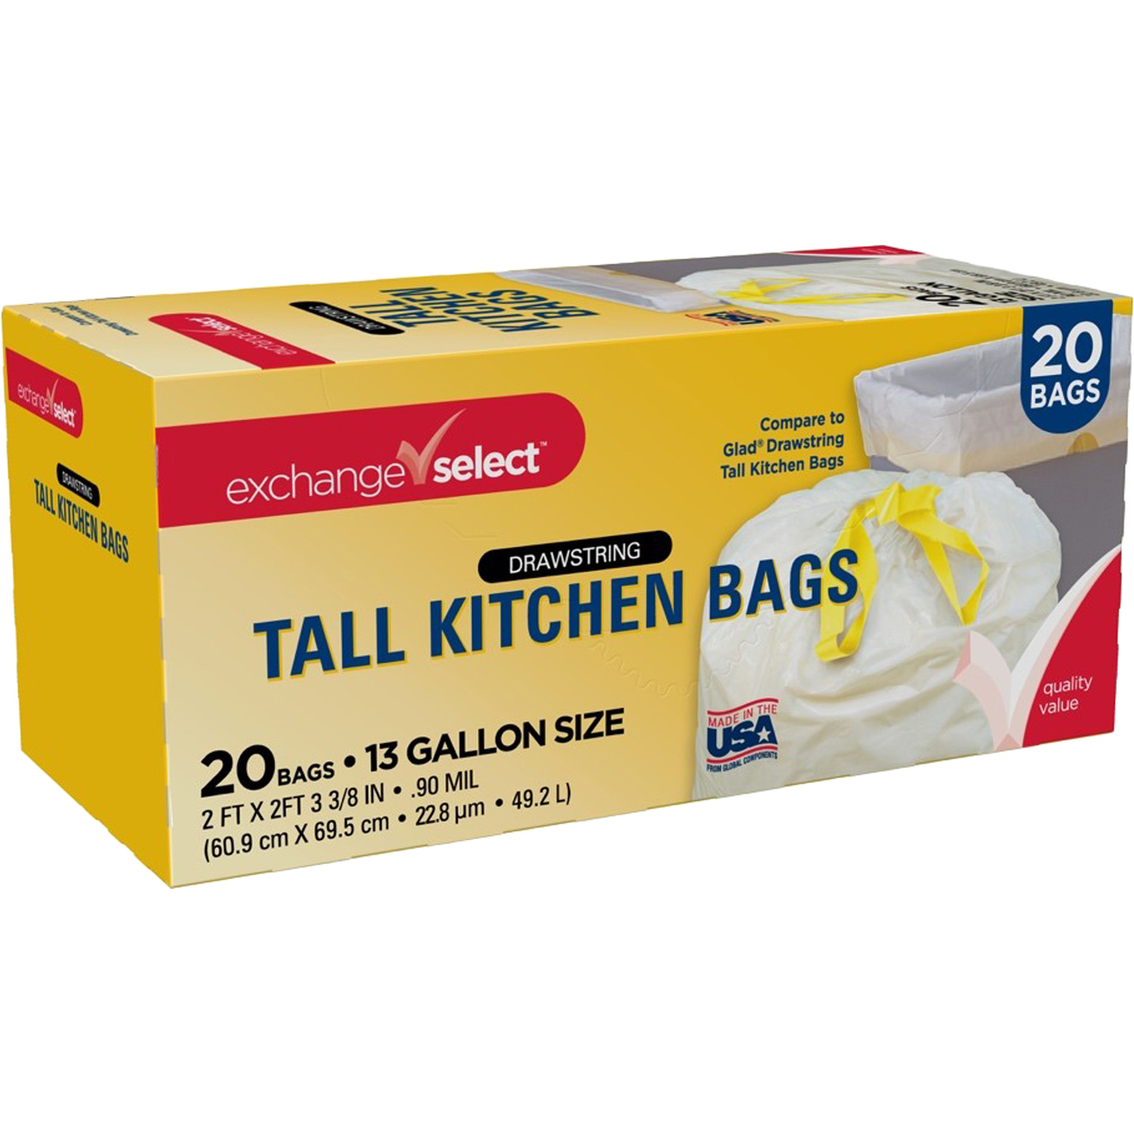 Tall Kitchen Trash Bag, Drawstring Closure, White, 13 Gallon, 90